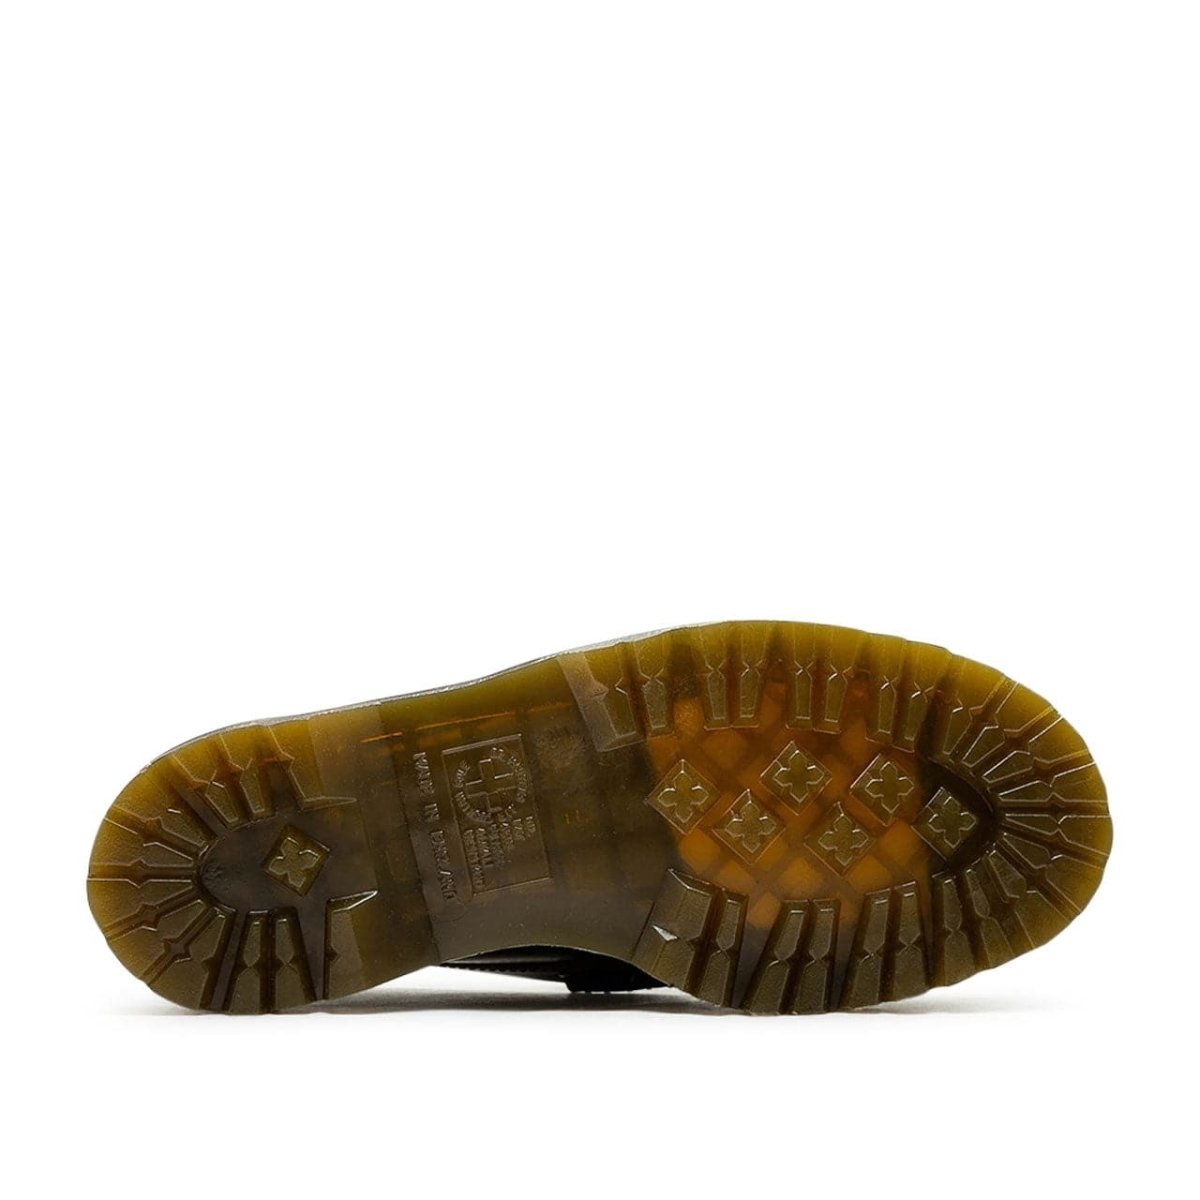 Dr. Martens Penton Bex Leather Loafers (Schwarz)  - Cheap Juzsports Jordan Outlet